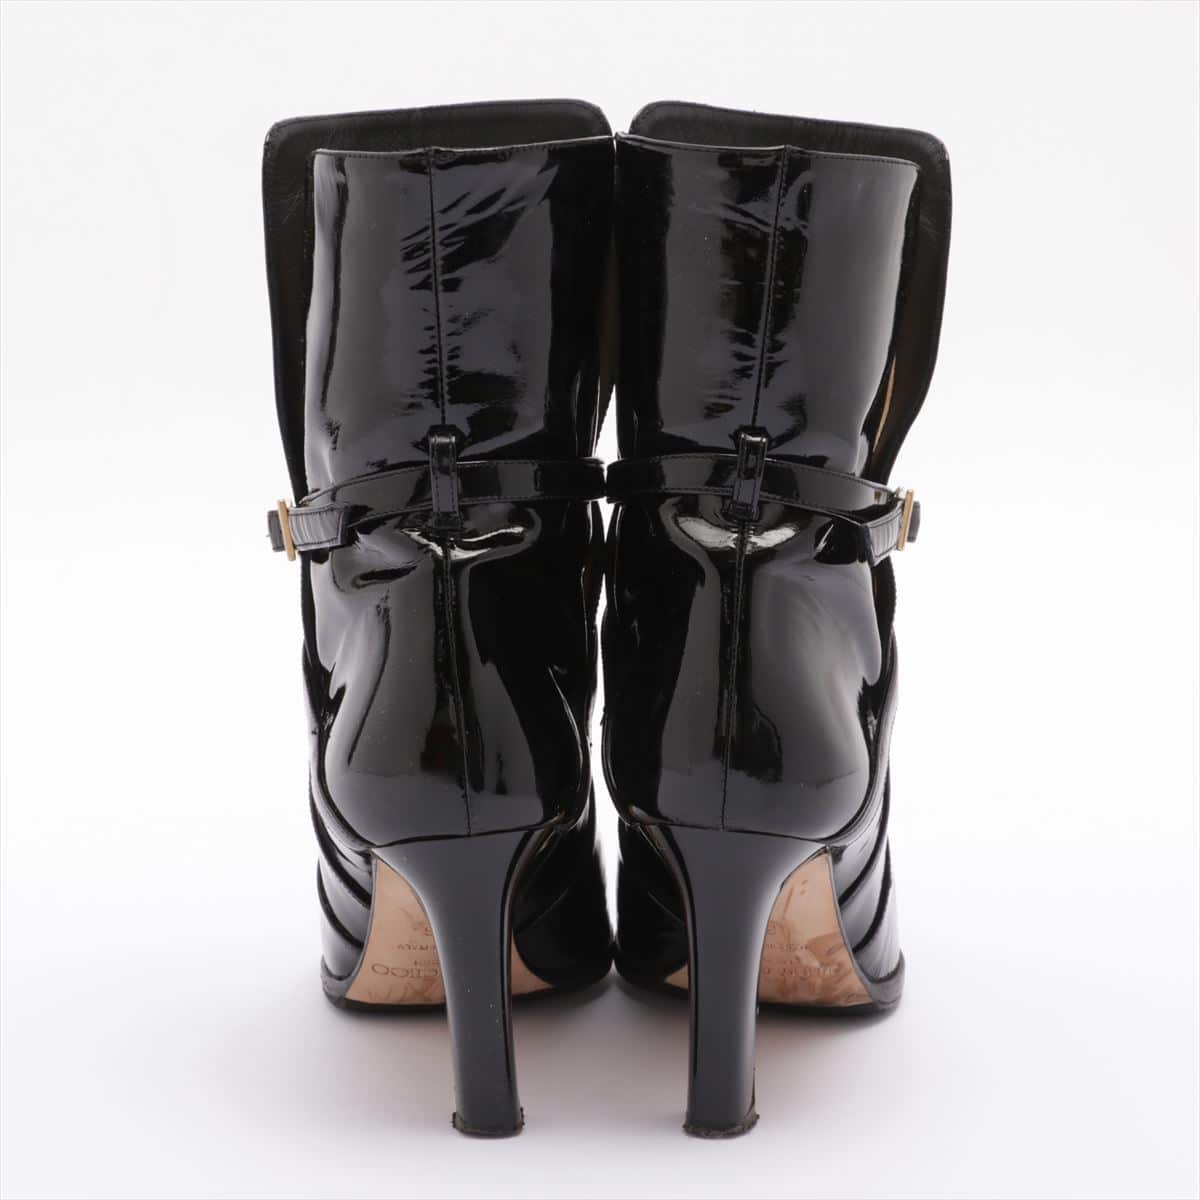 Jimmy Choo Patent leather Short Boots 36 Ladies' Black